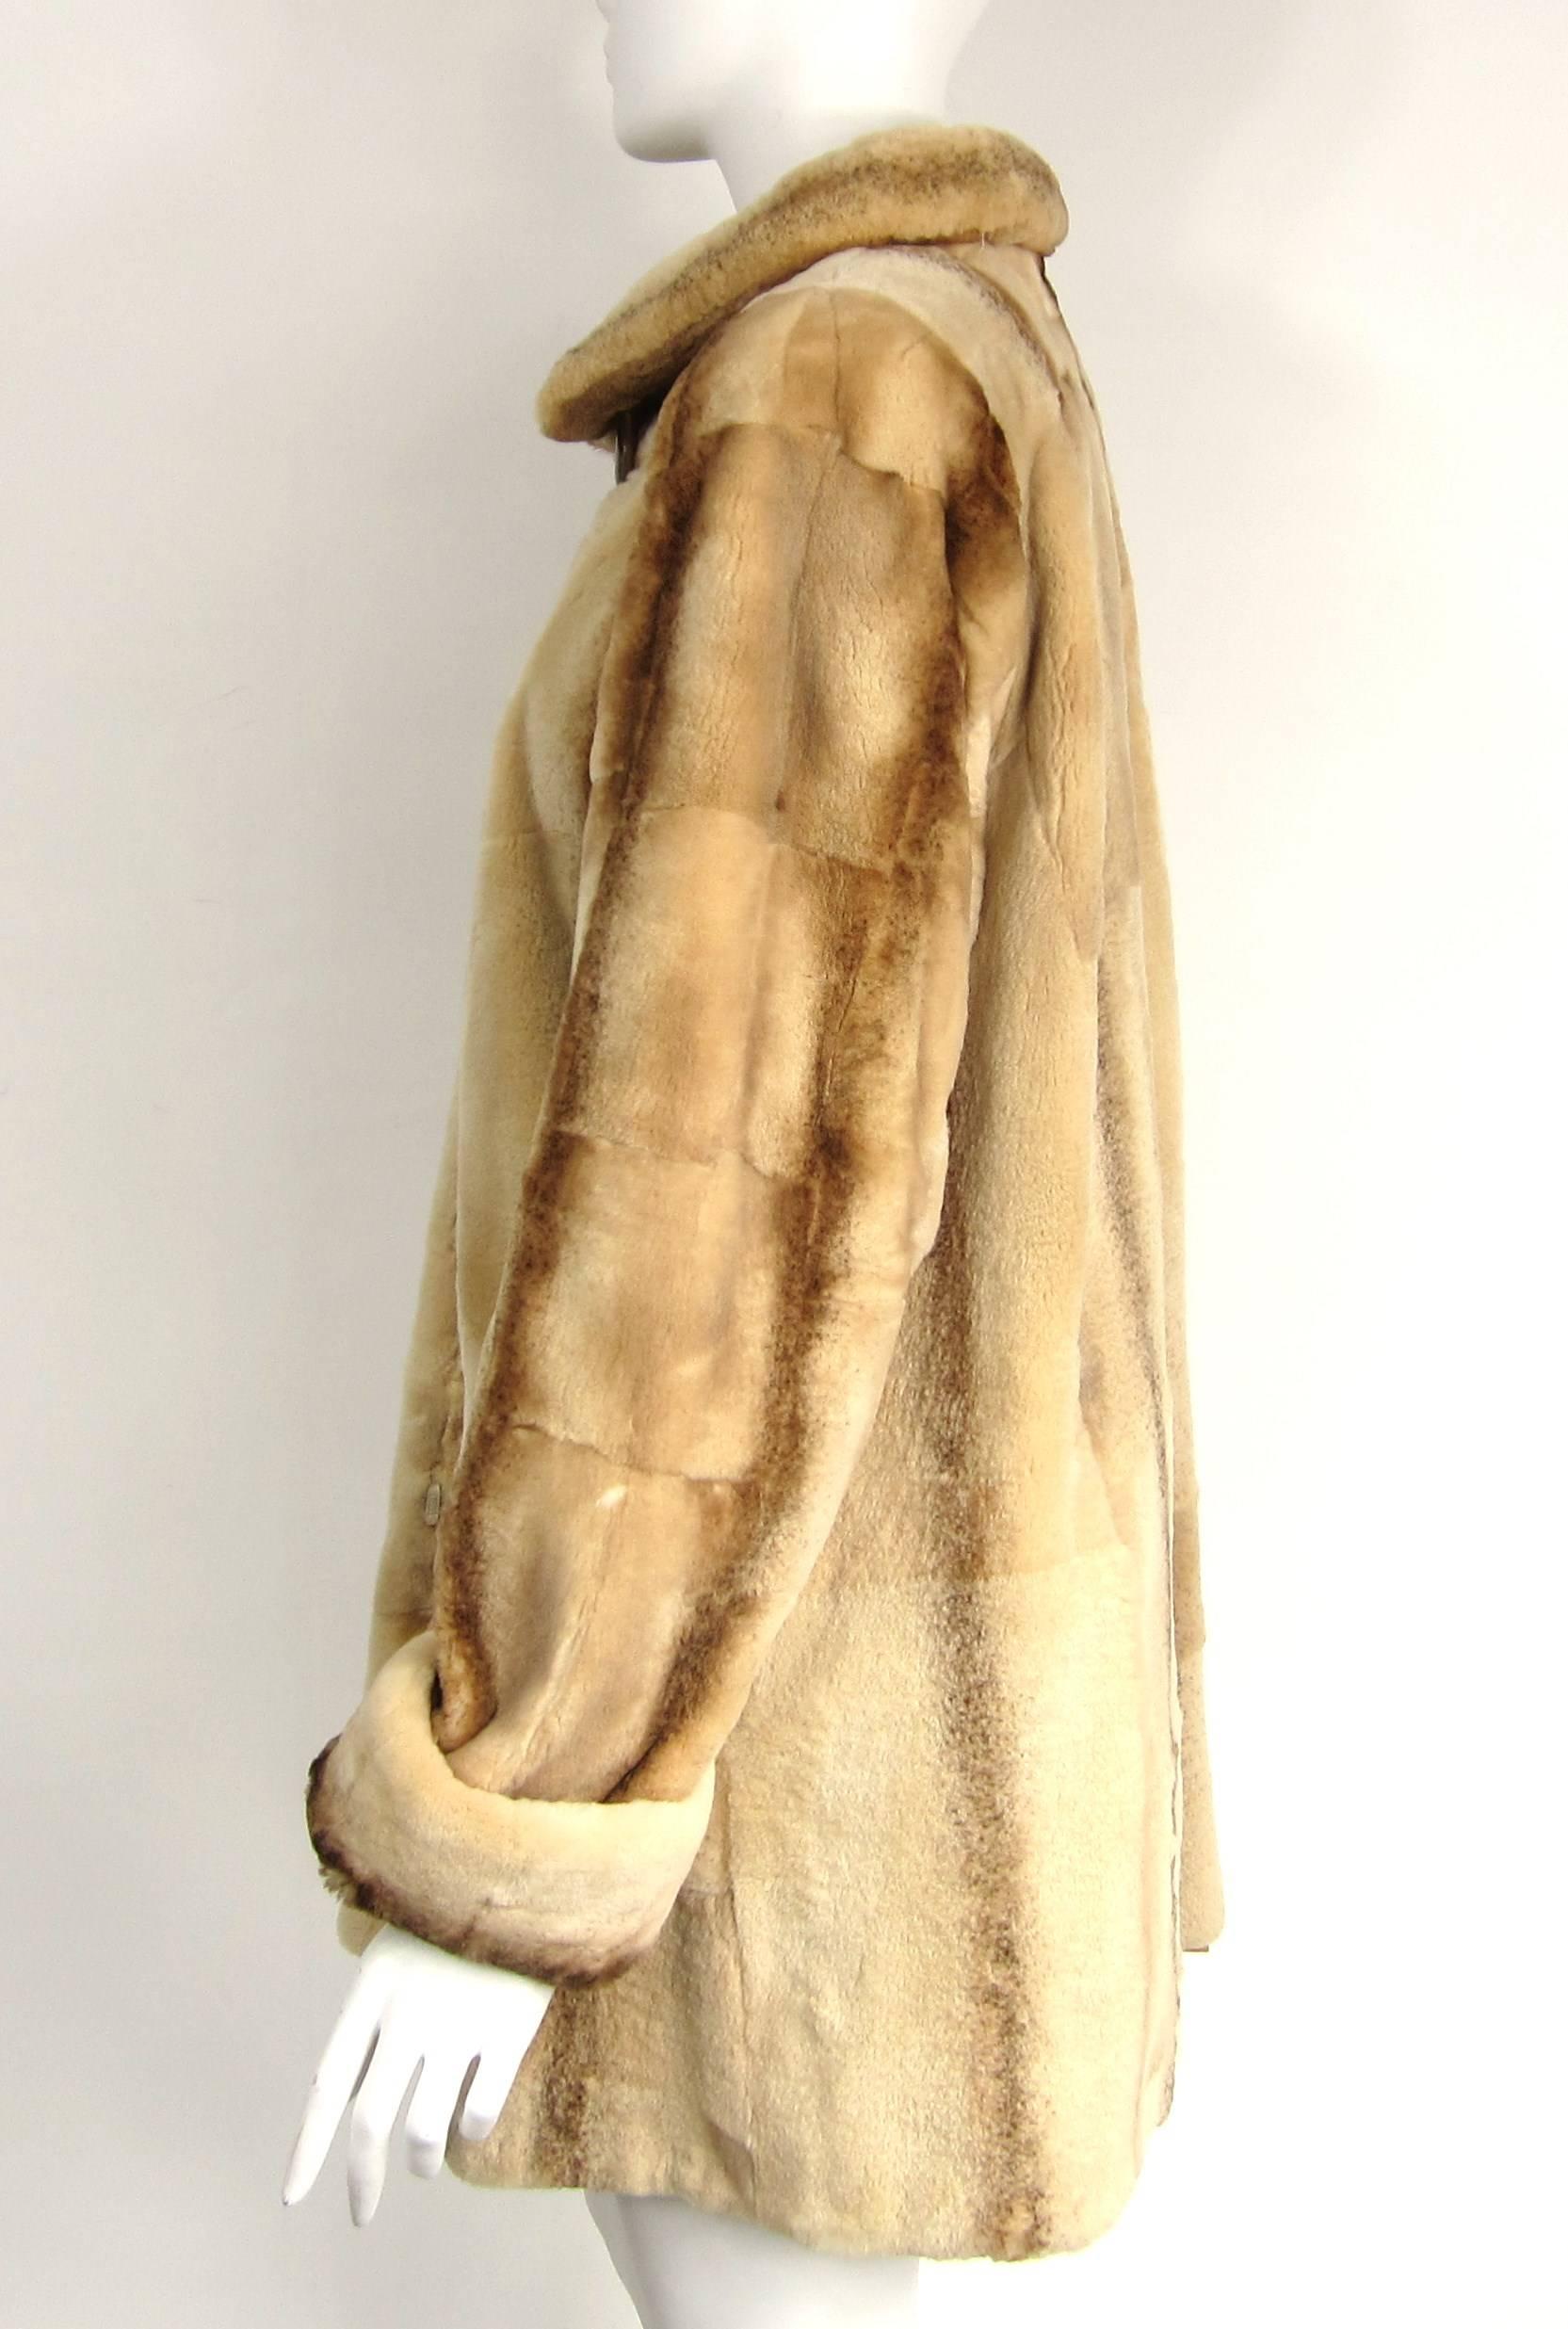 sheared mink coats